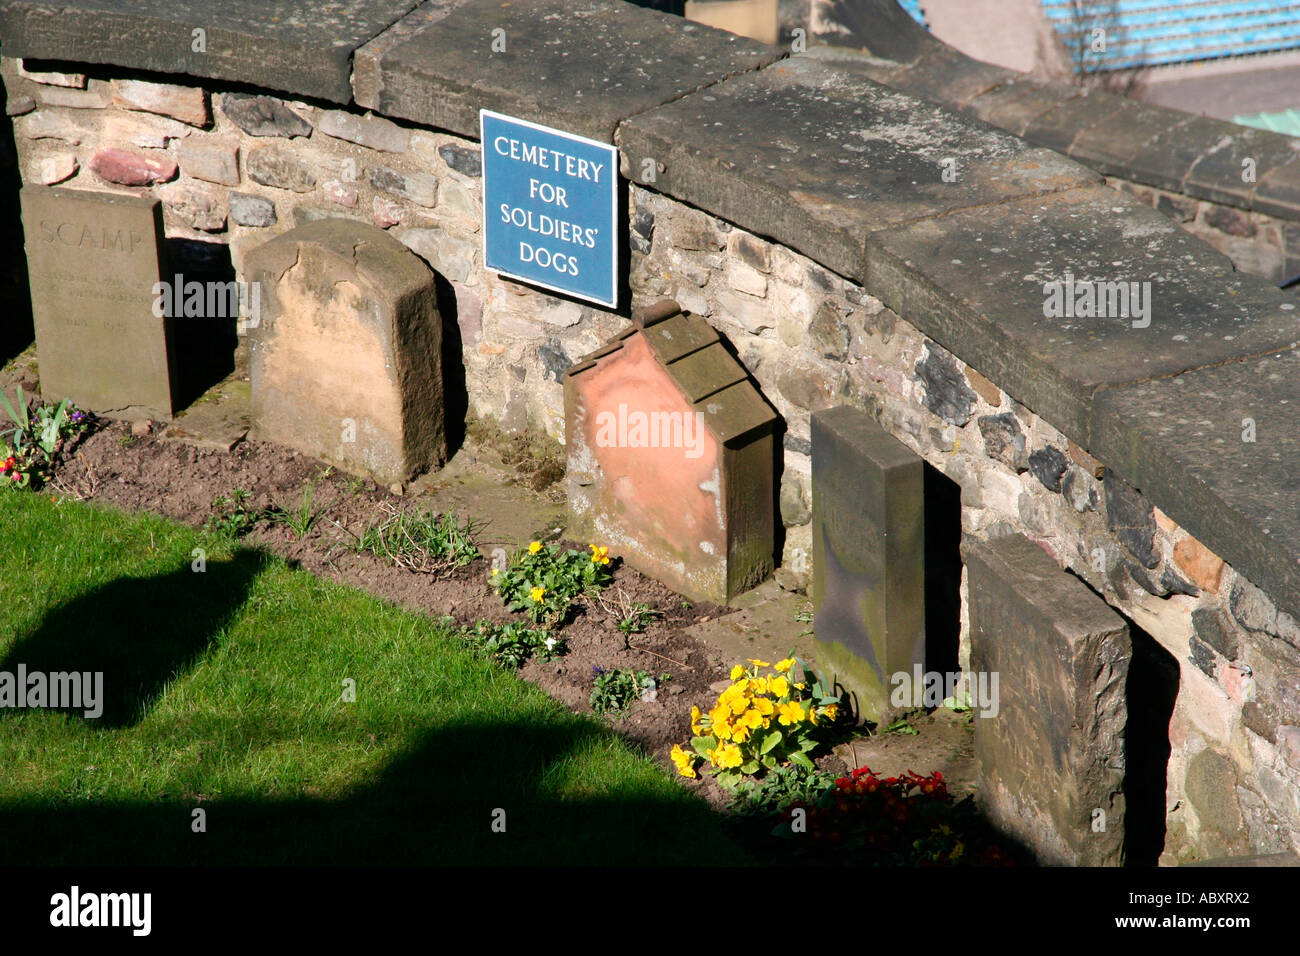 cemetery for soldiers dogs edinburgh castle scotland uk europe Stock Photo